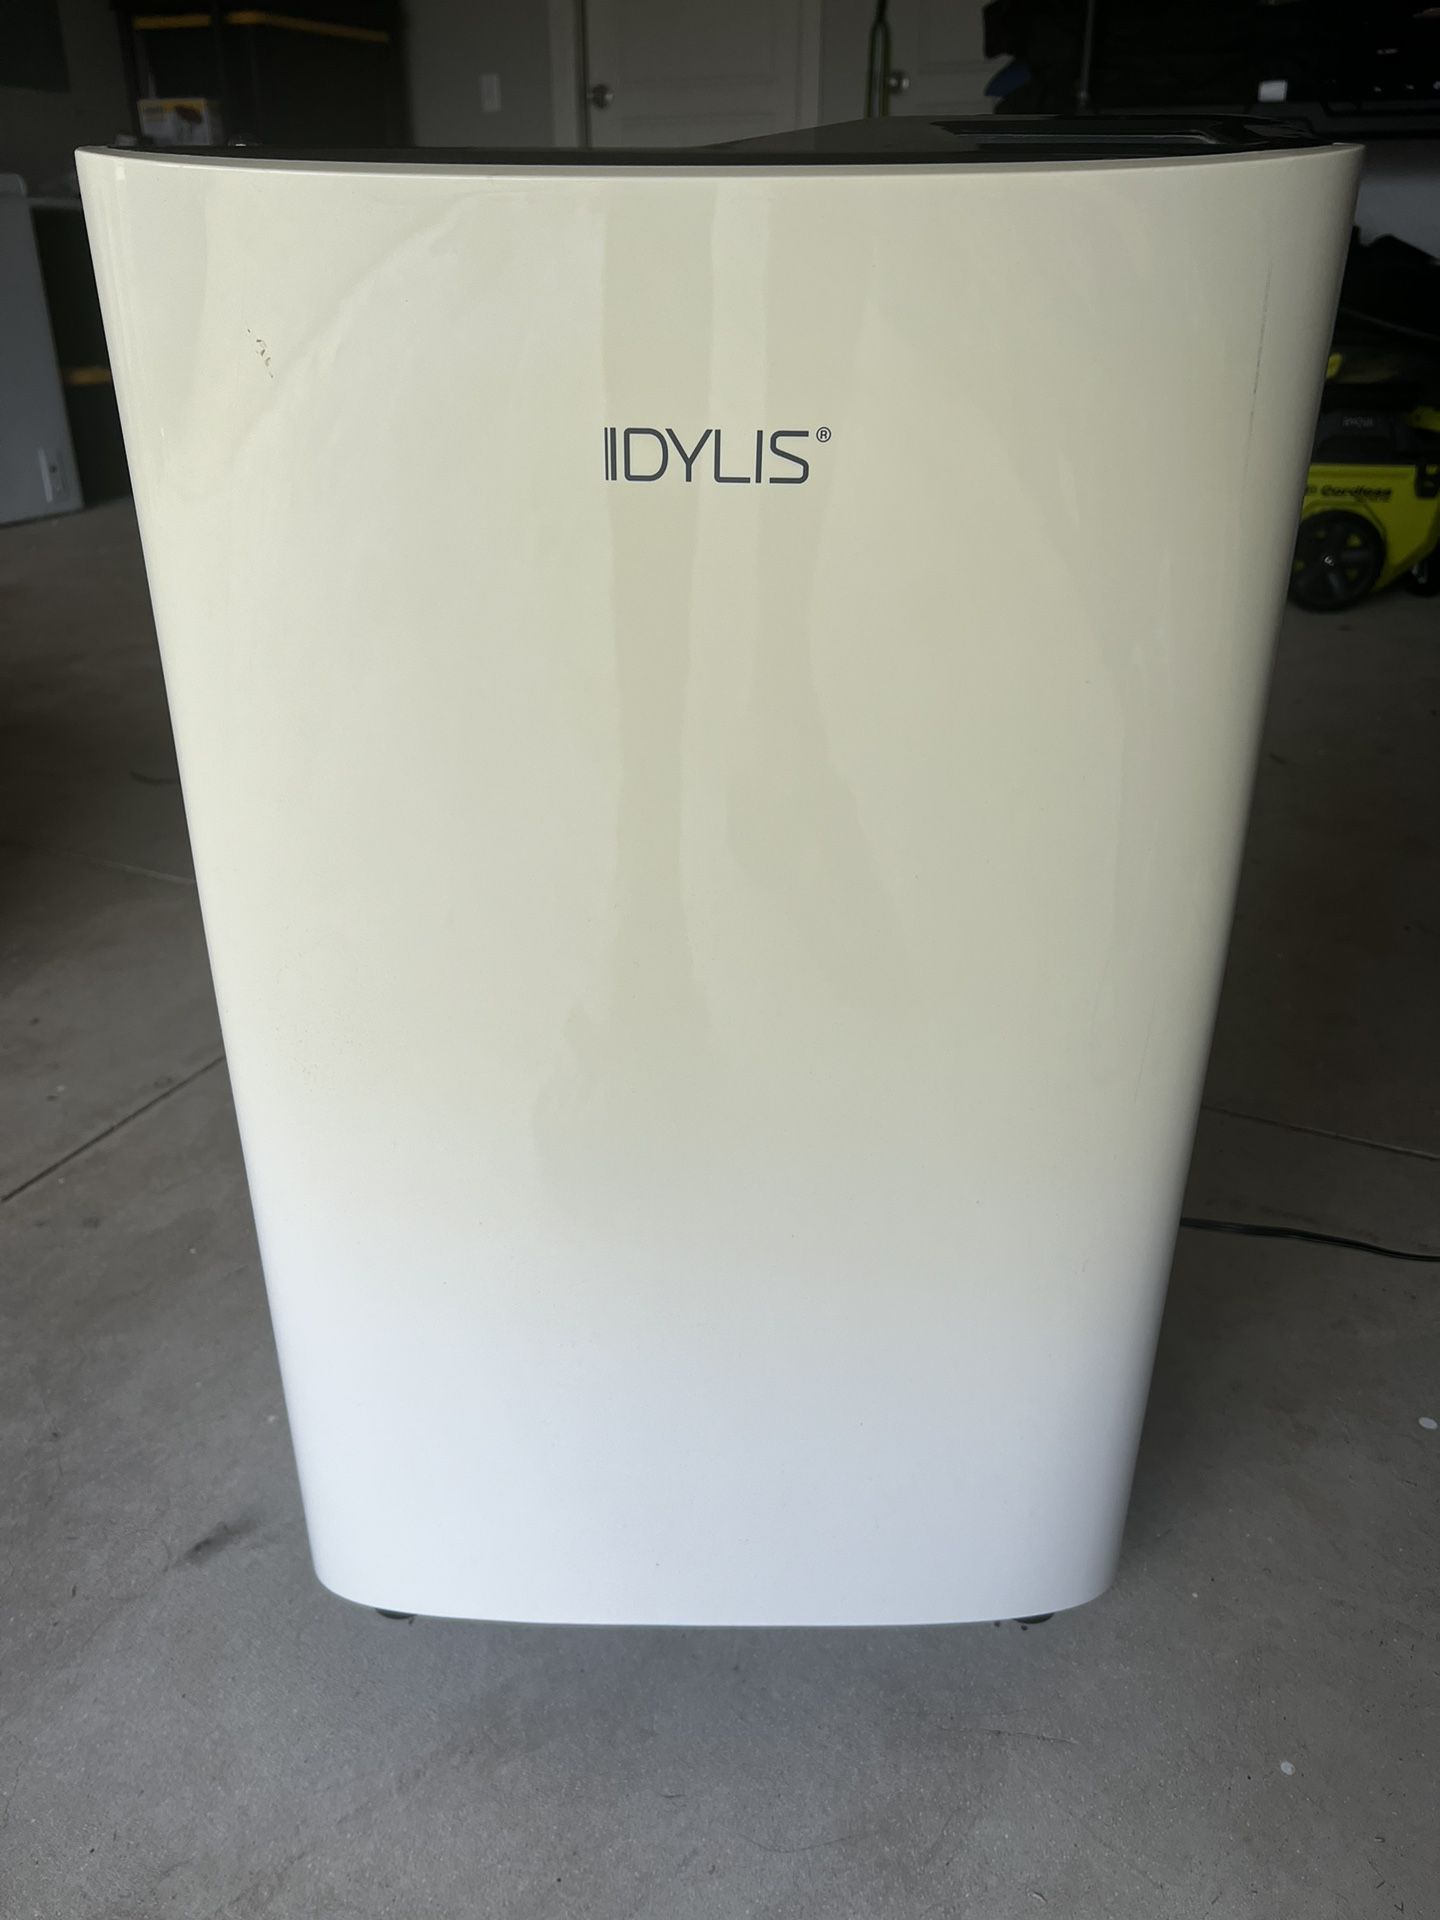 IDYLIS Air purifier